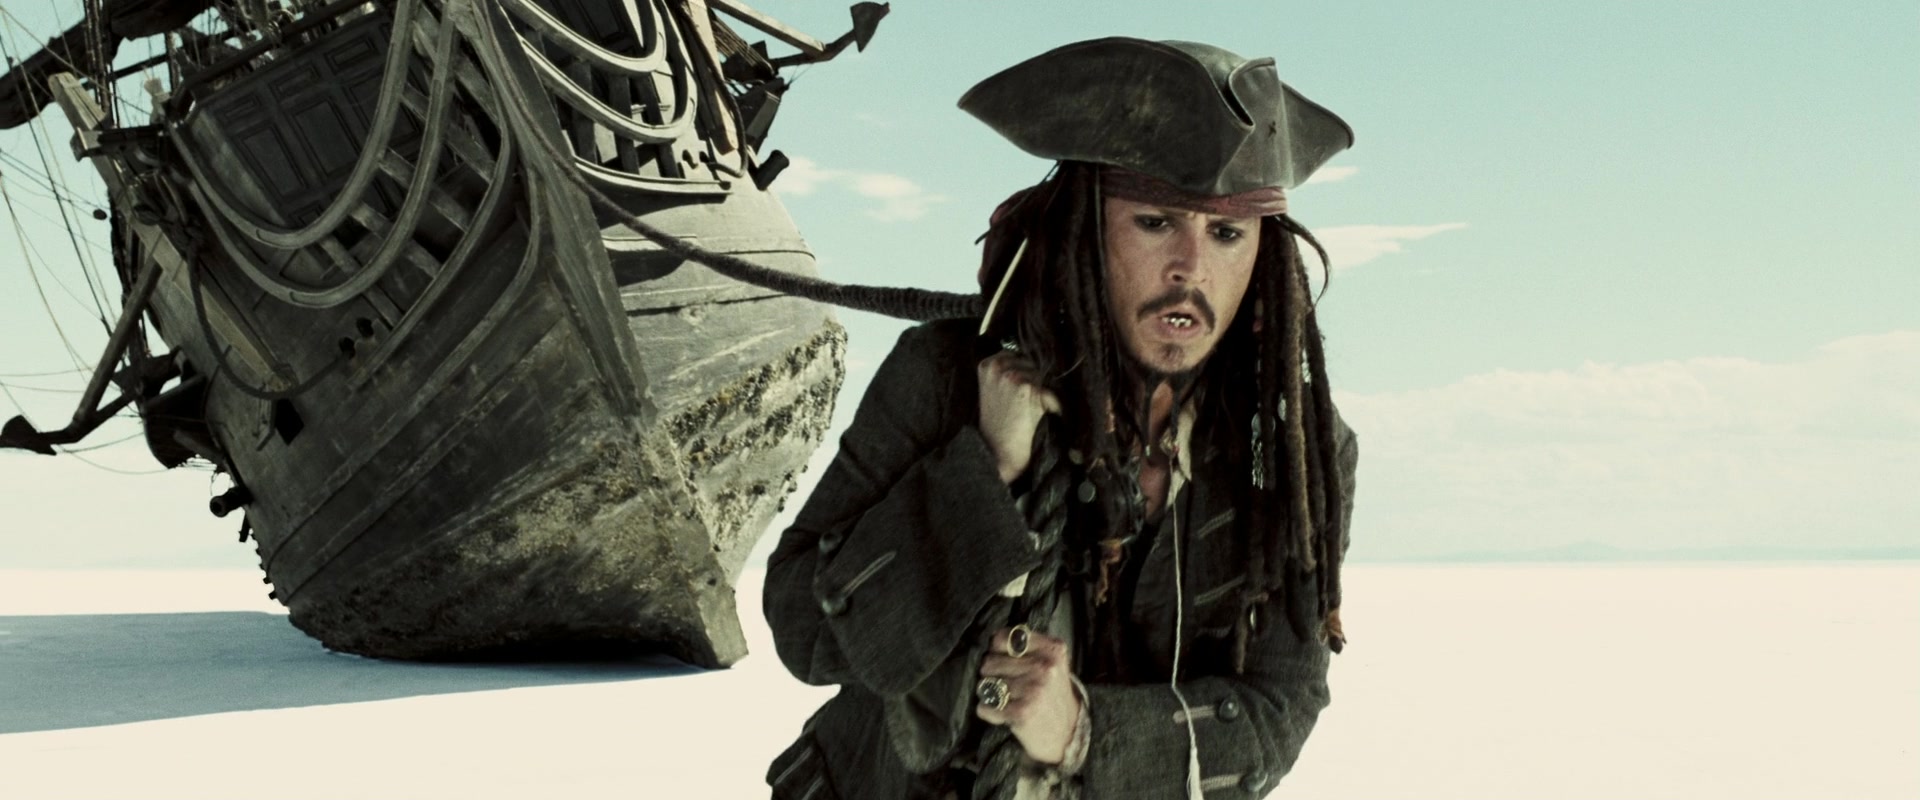 Captain Jack Sparrow (Johnny Depp) pulls the Black Pearl across Davy Jones' Locker in Pirates of the Caribbean: At World's End (2007) via Blu-ray